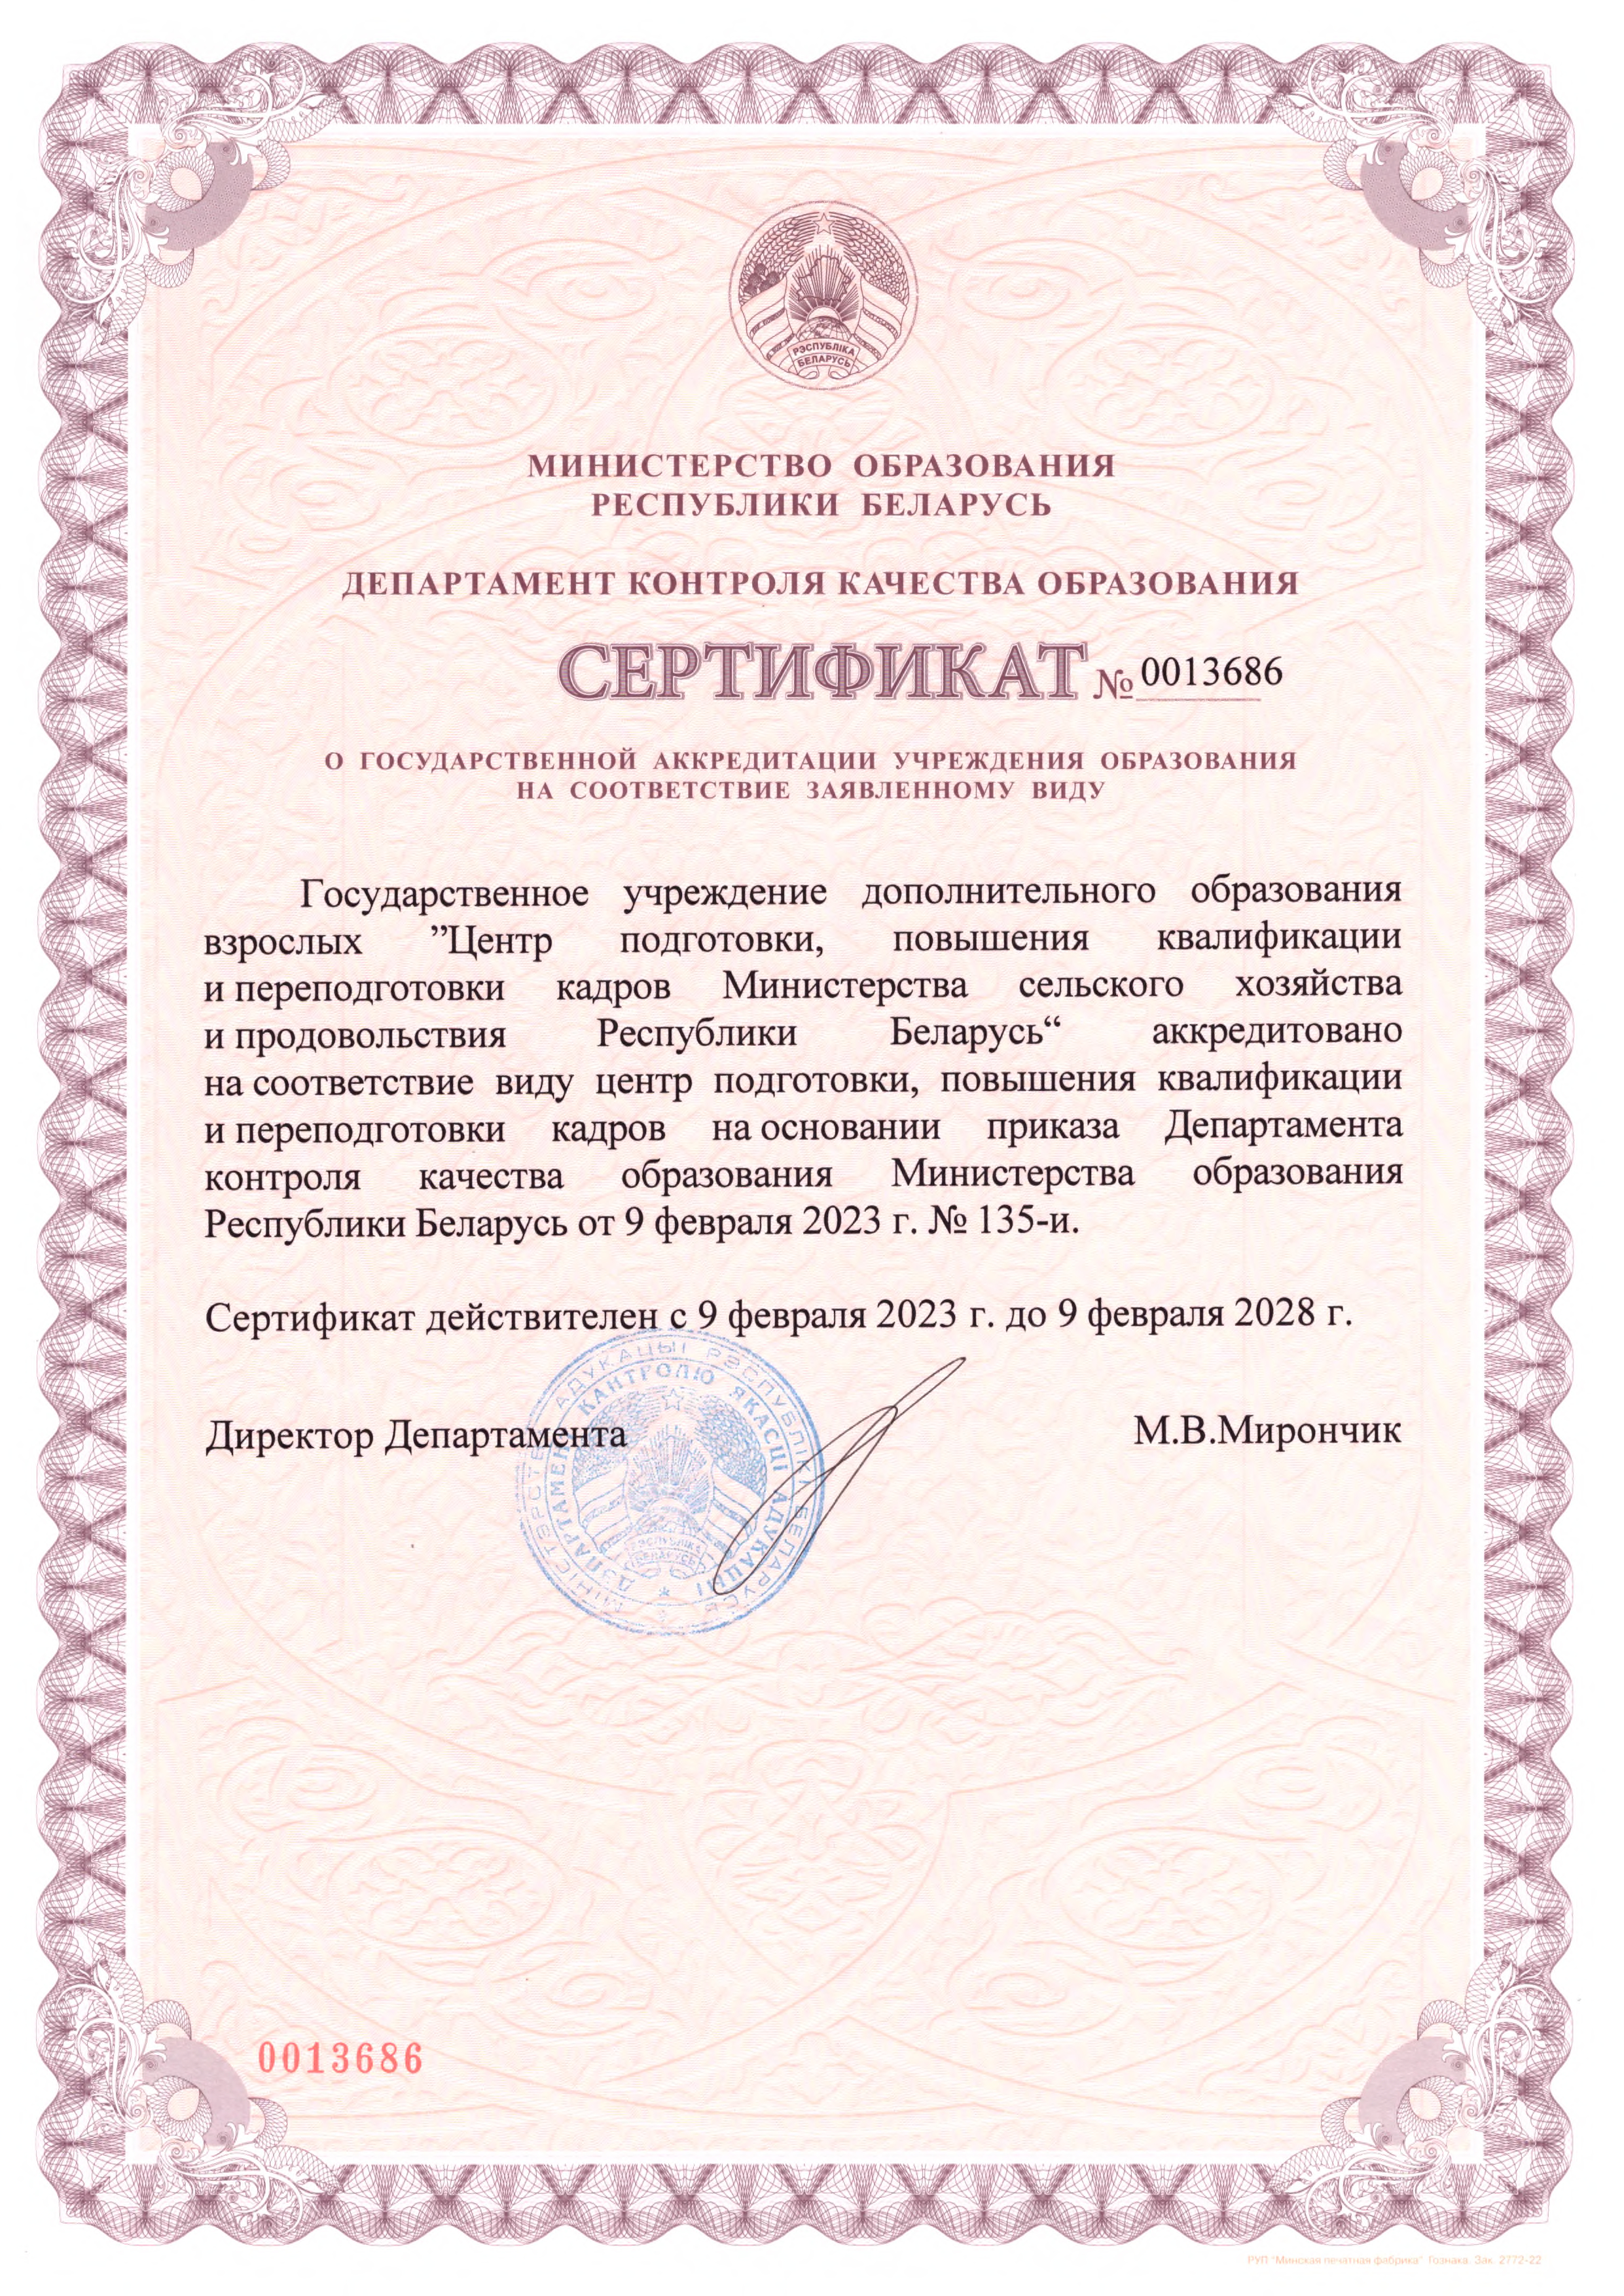 сертификат об аккредитации